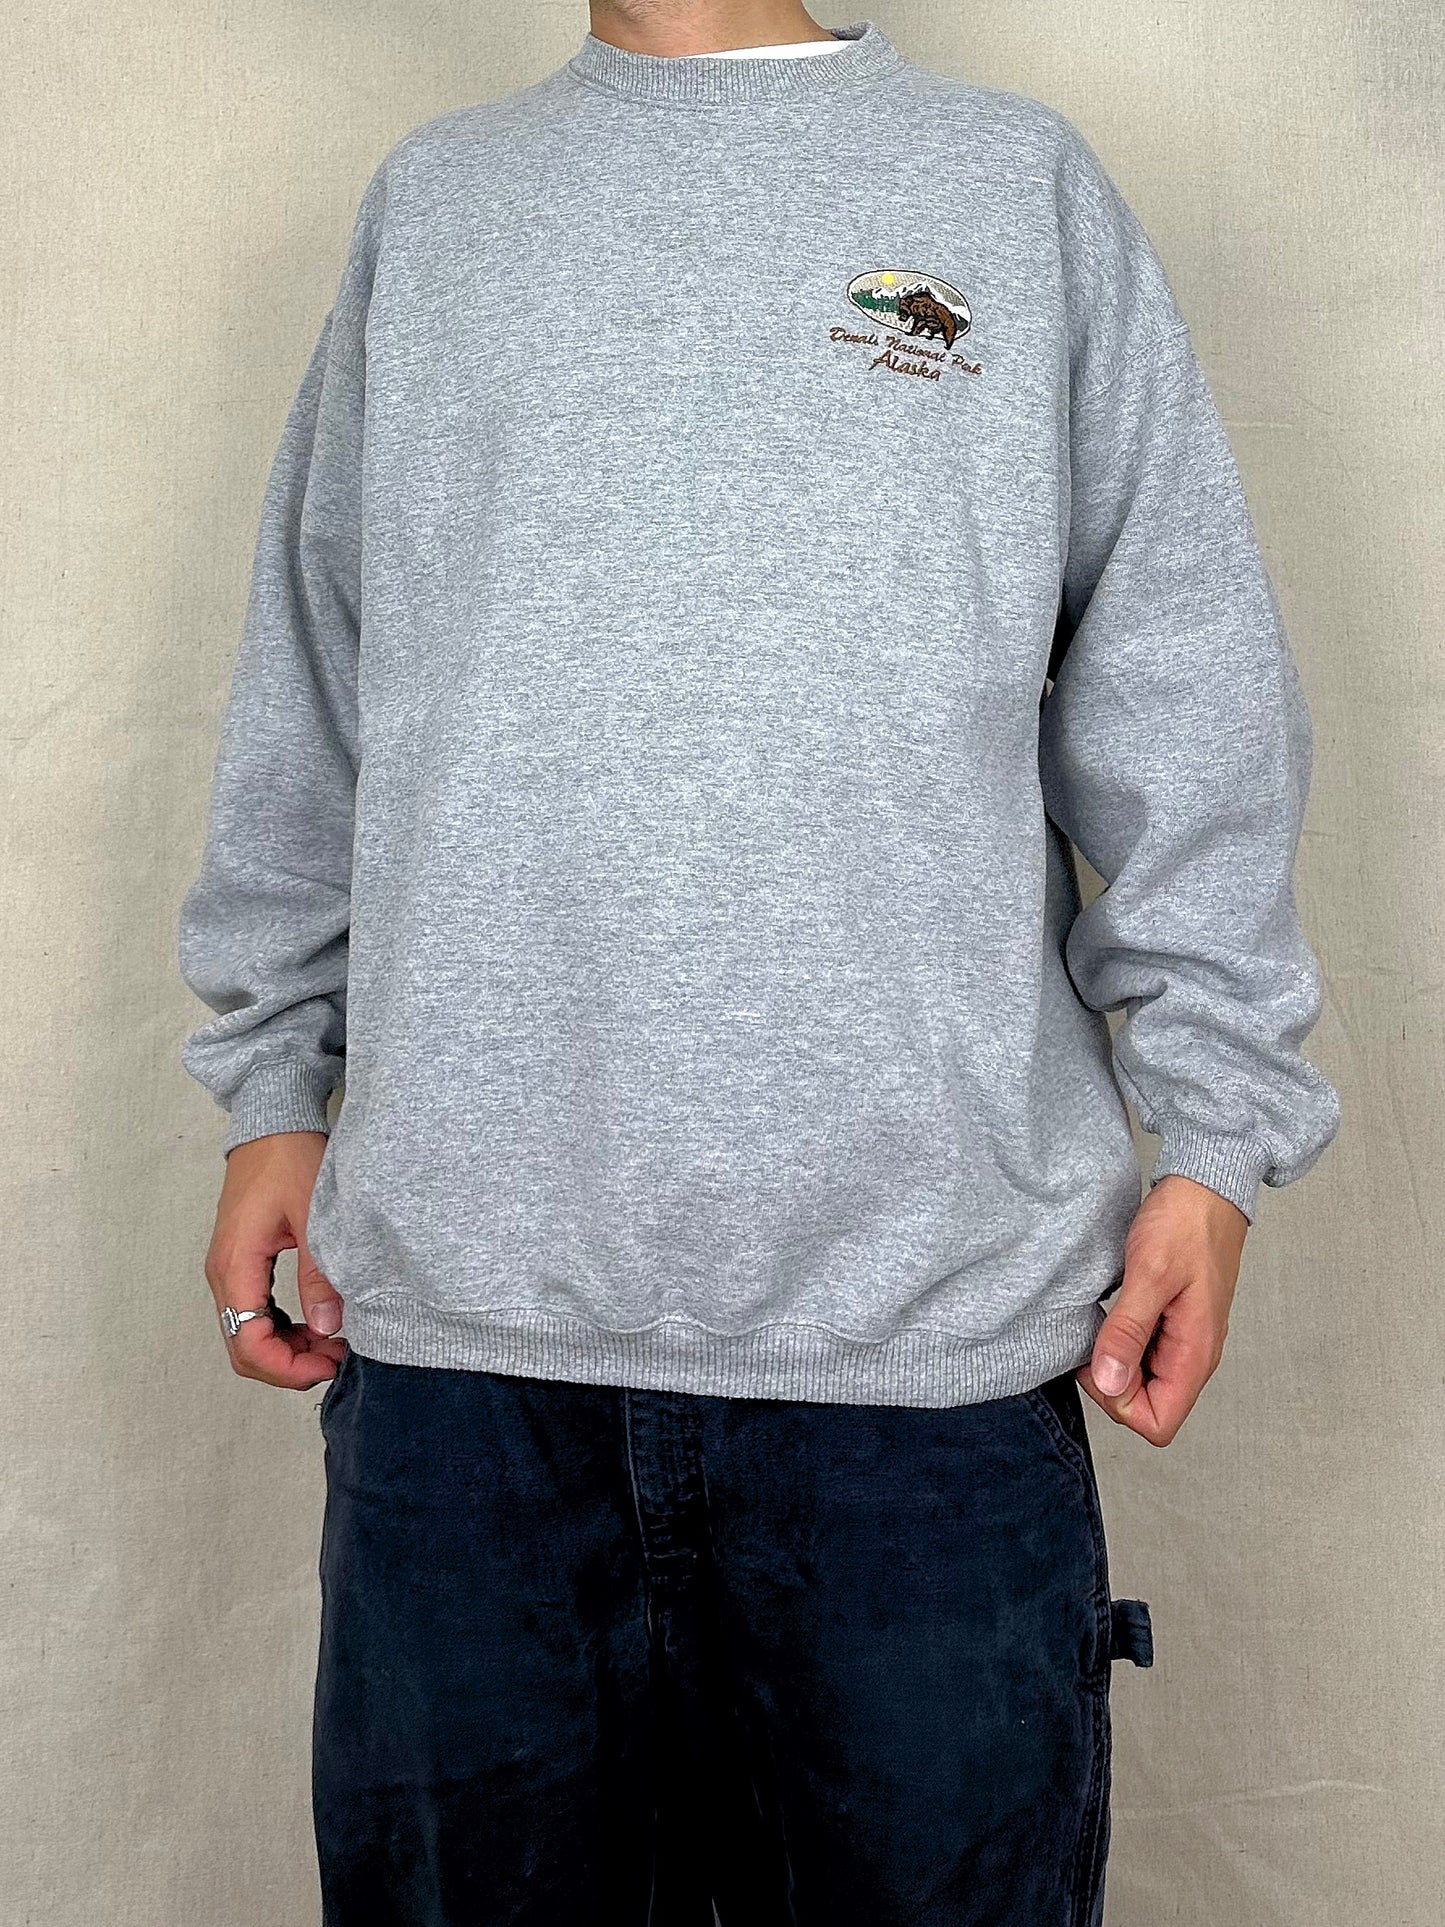 90's Denali National Park Alaska USA Made Embroidered Vintage Sweatshirt Size XL-2XL